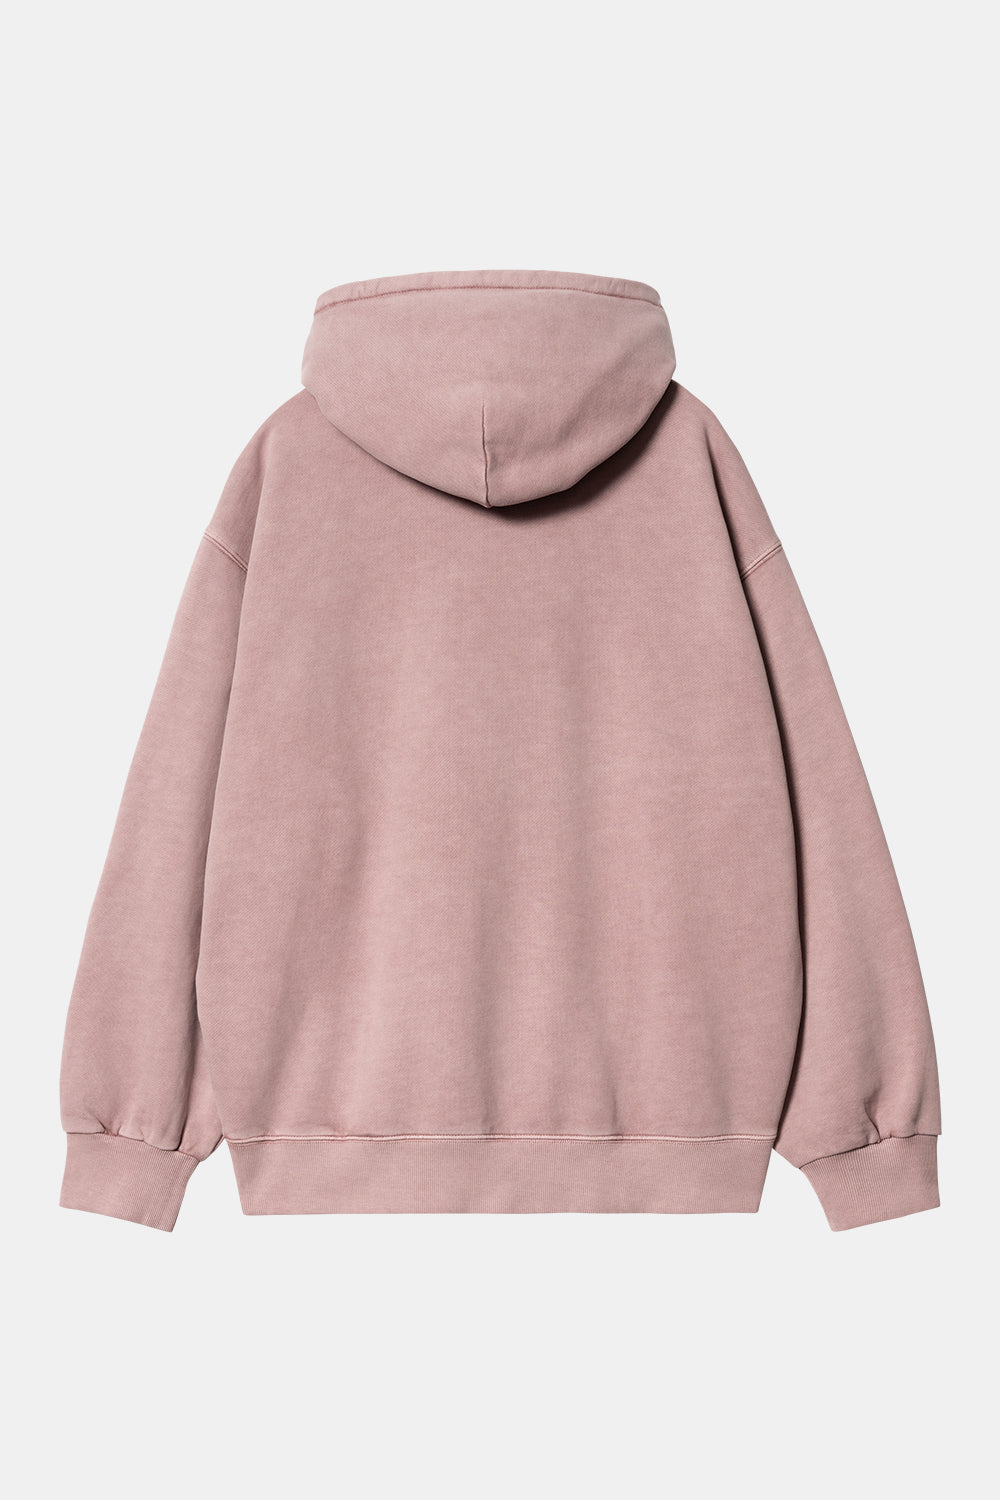 Carhartt Hooded Vista Sweatshirt (Glassy Pink)